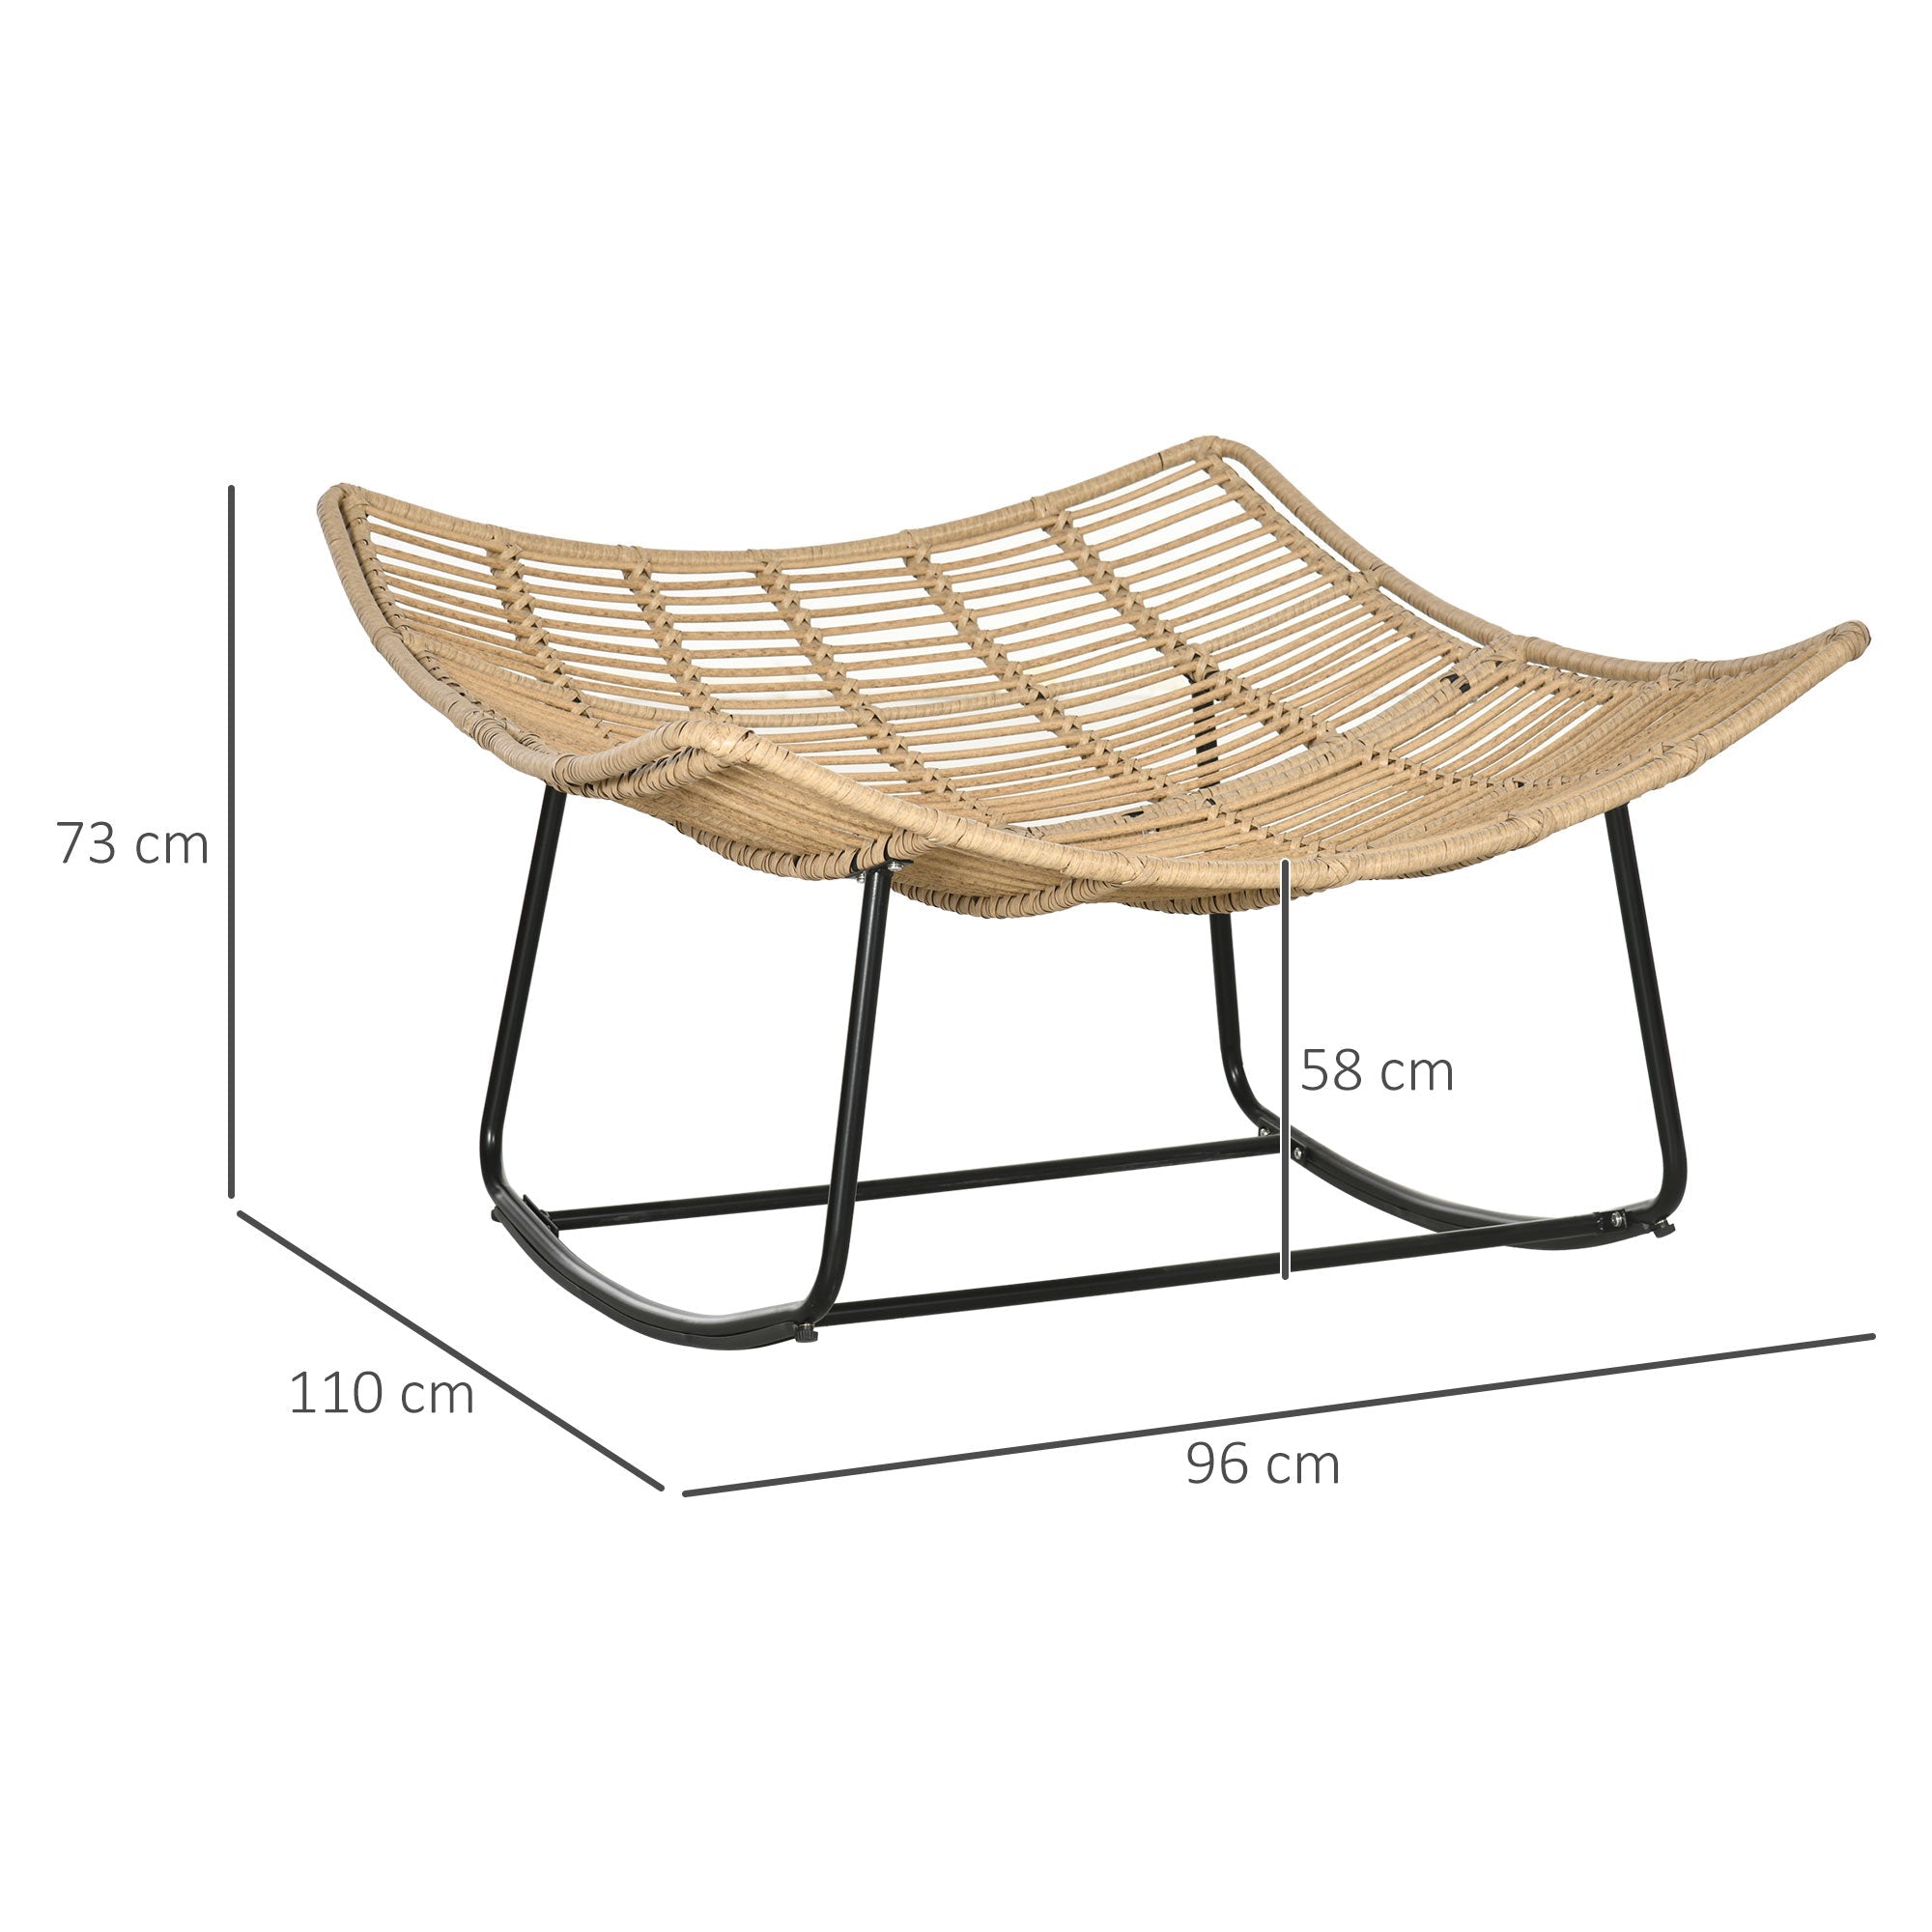 Outdoor PE Rattan Rocking Chair, Patio Luxury Round Wicker Garden Porch Furniture w/ Thick Cushion, Natural Wood Finish-2